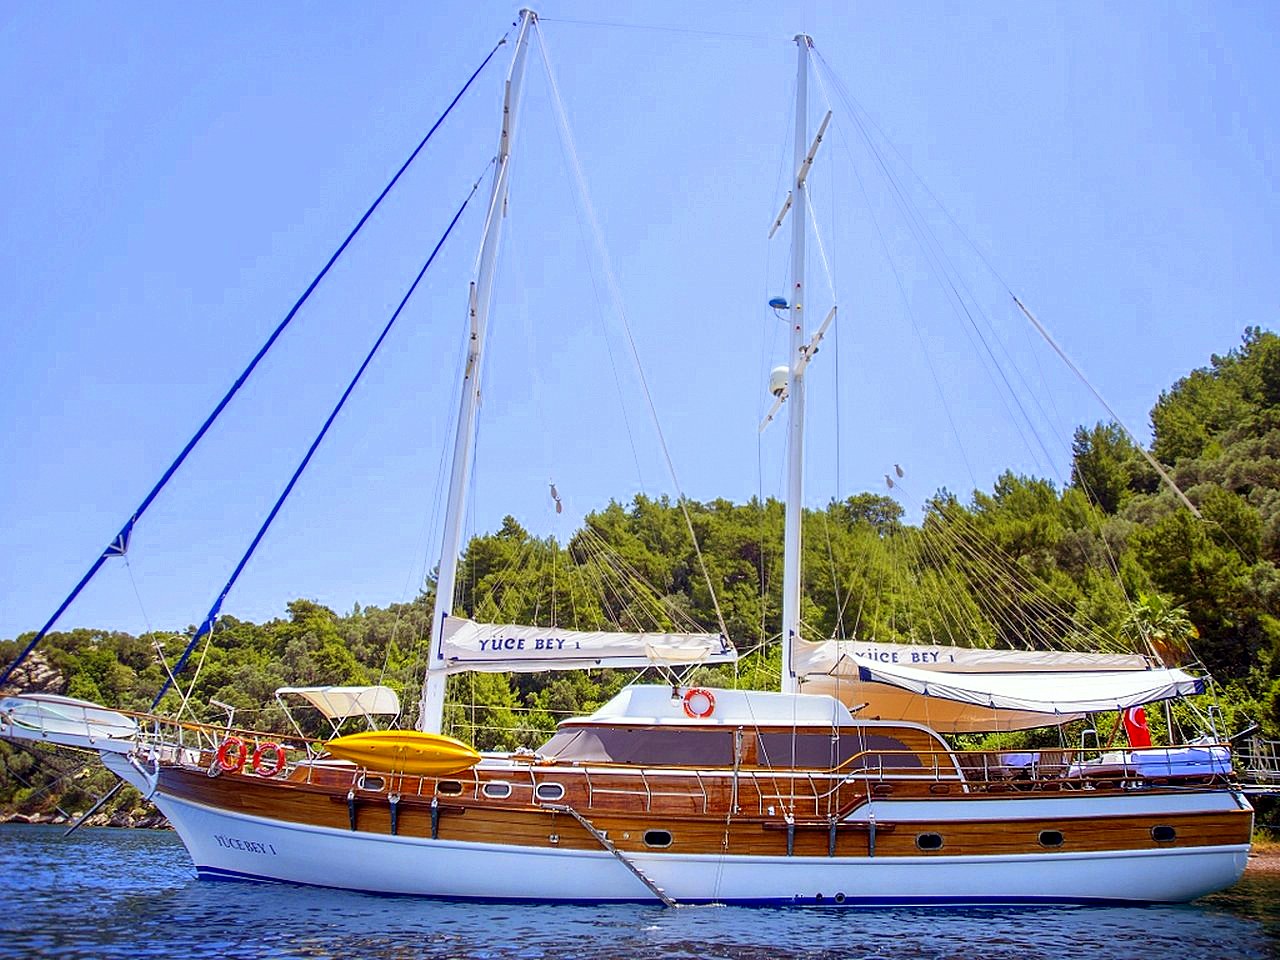 Yacht Yüce Bey 1